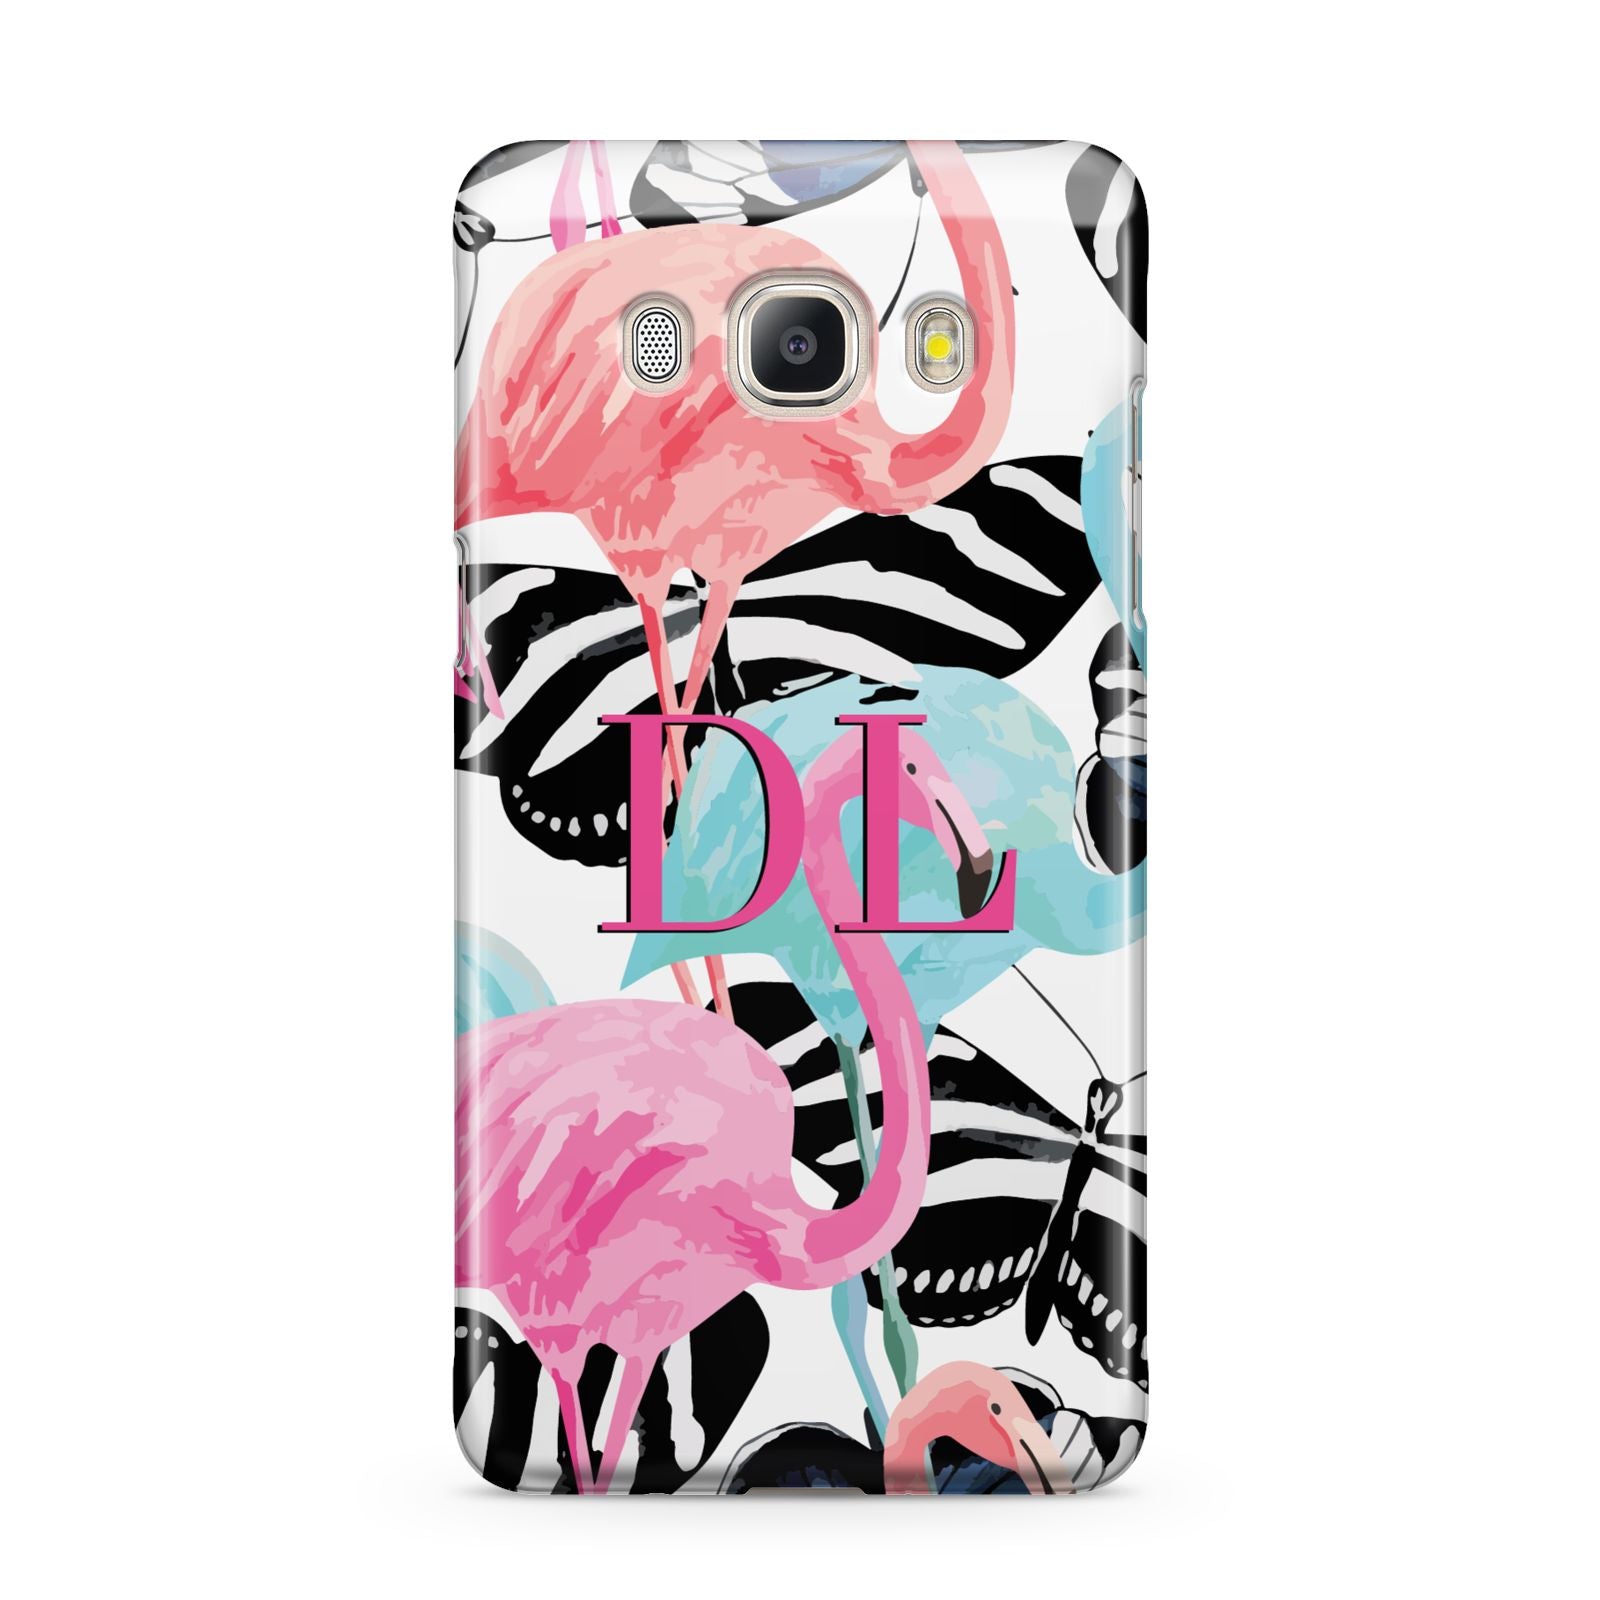 Butterflies Flamingos Samsung Galaxy J5 2016 Case